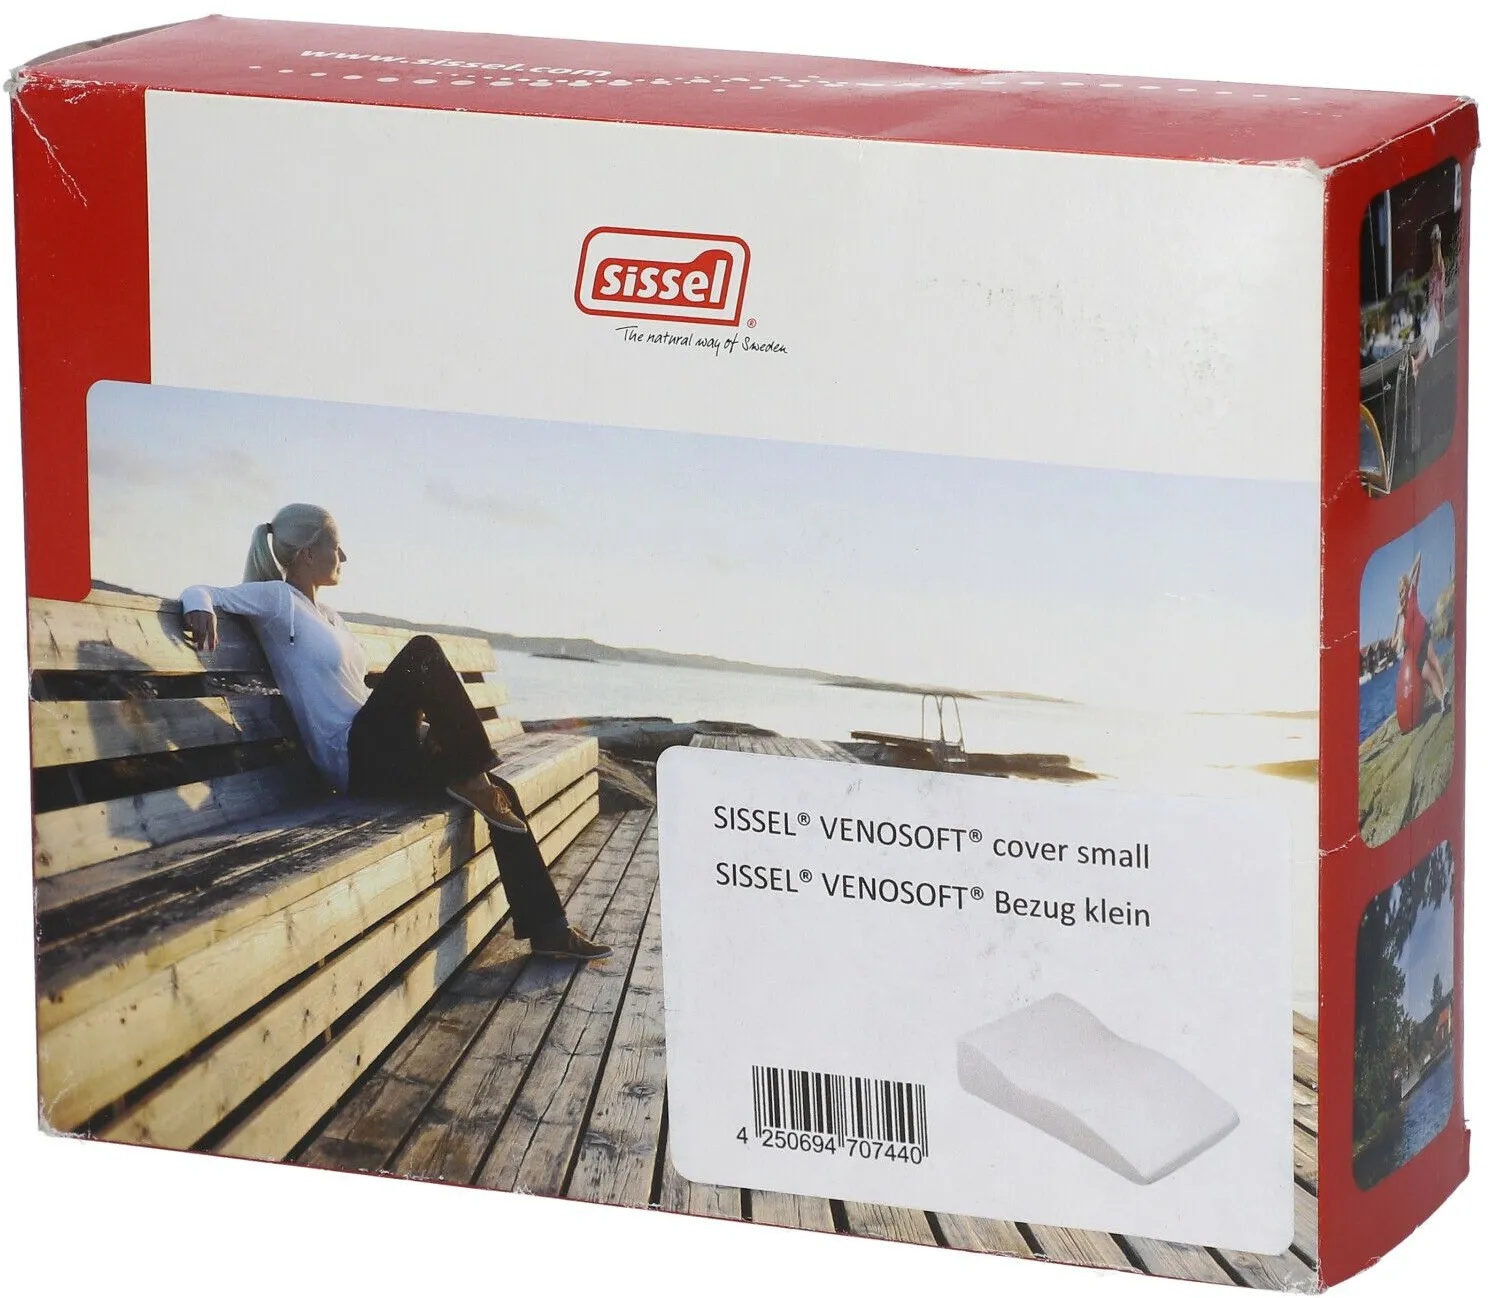 Sissel® Venosoft® Cover Small - Beinhebekissen